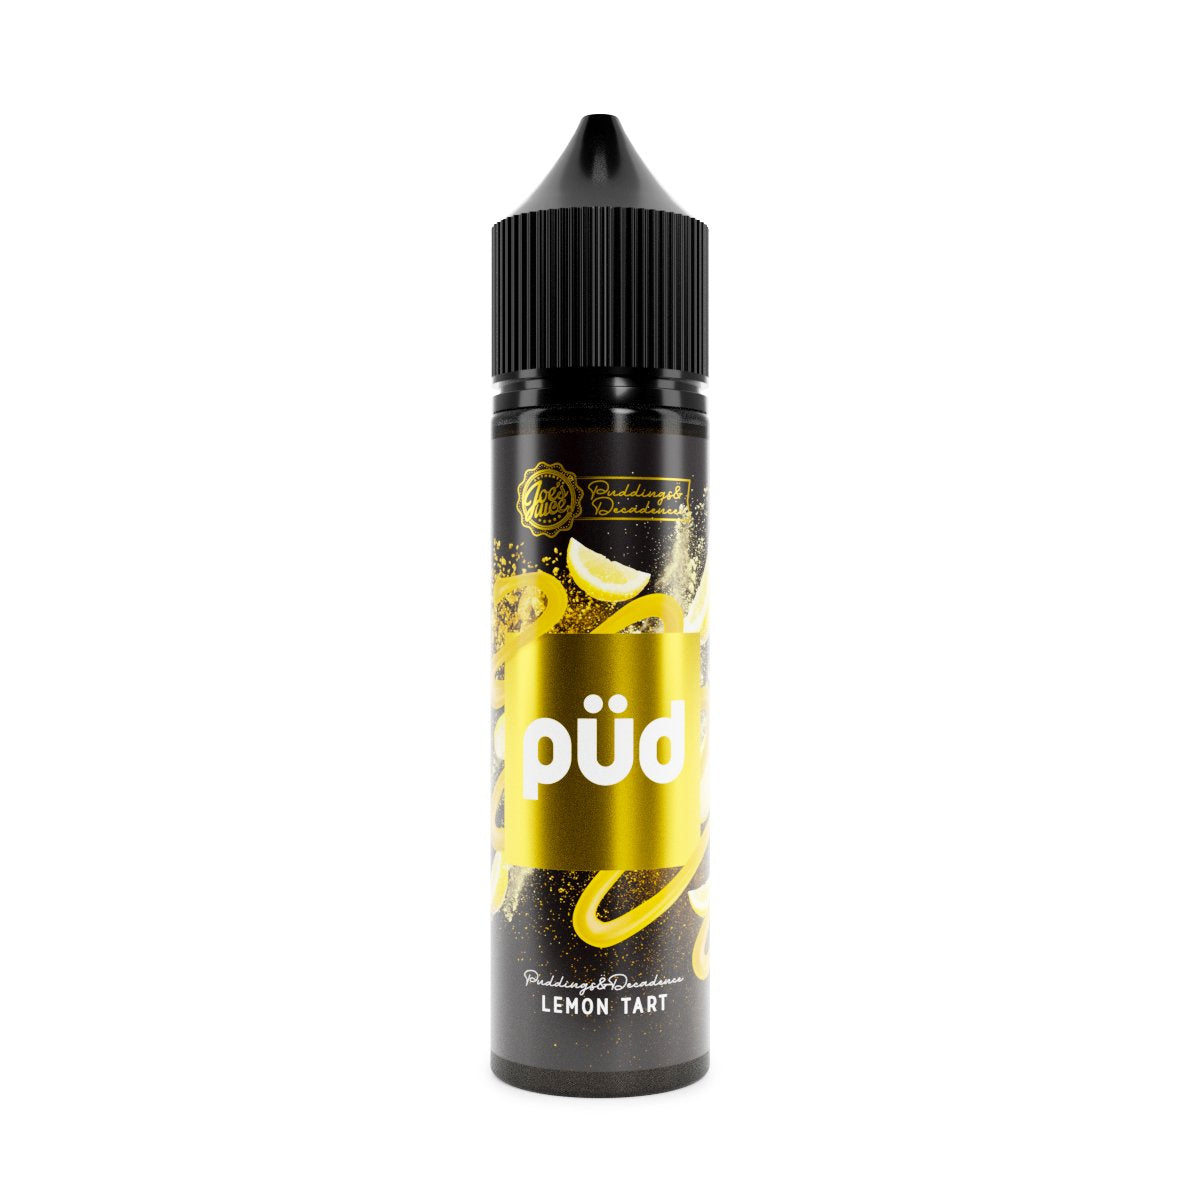 Pud Pudding & Decadence Lemon Tart 0mg 50ml Shortfill E-Liquid